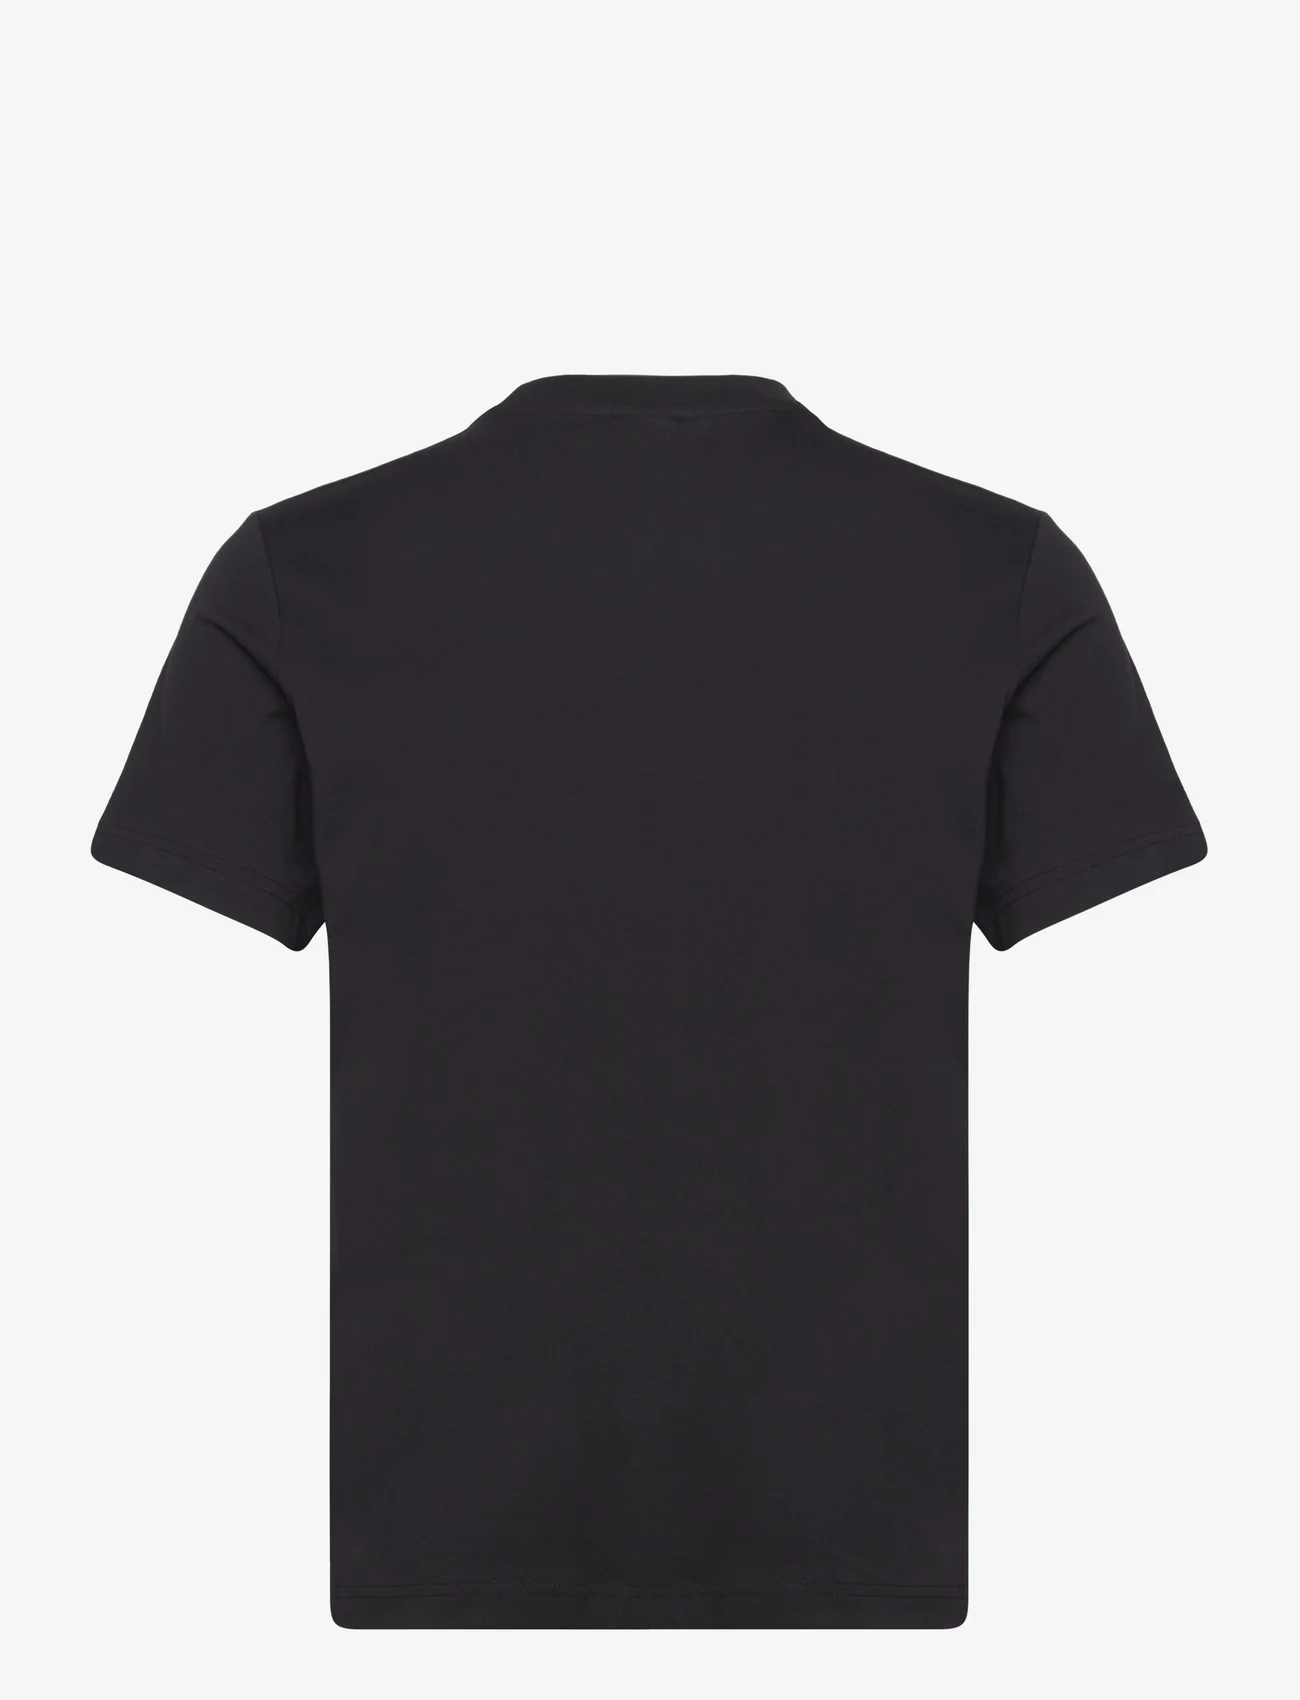 Champion - Crewneck T-Shirt - short-sleeved t-shirts - black beauty - 1